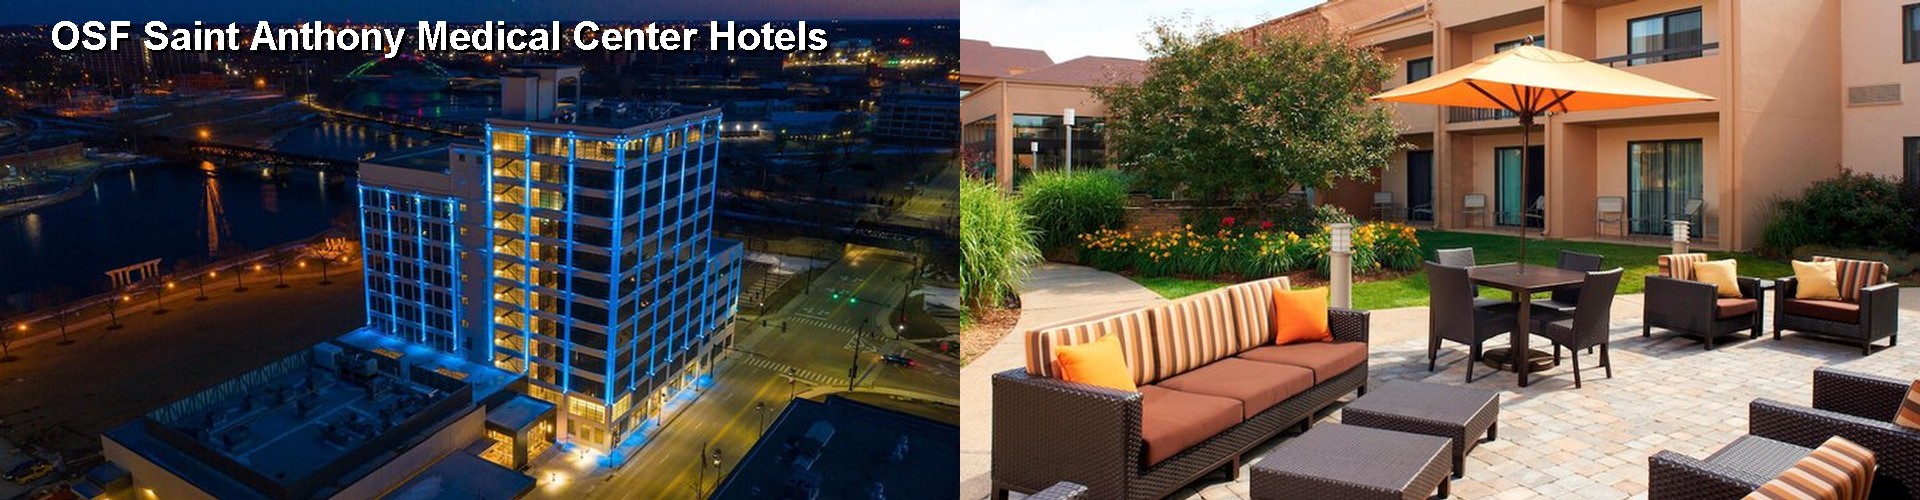 4 Best Hotels near OSF Saint Anthony Medical Center